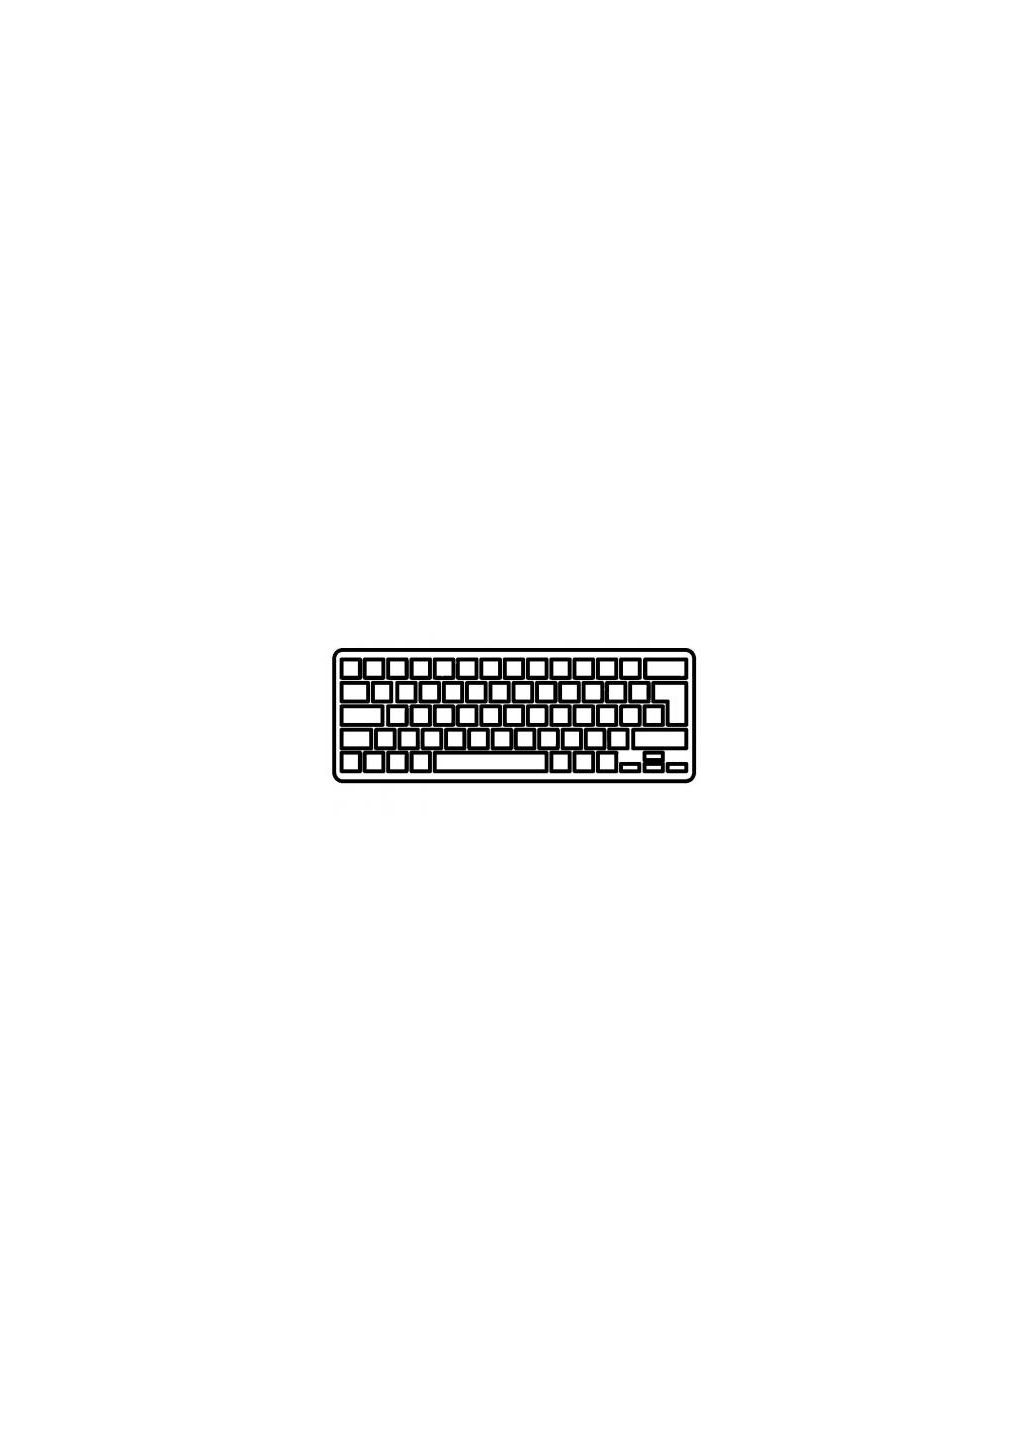 Клавиатура ноутбука (A43197) Dell vostro 3300/3400/3500 series черная ua (276707128)